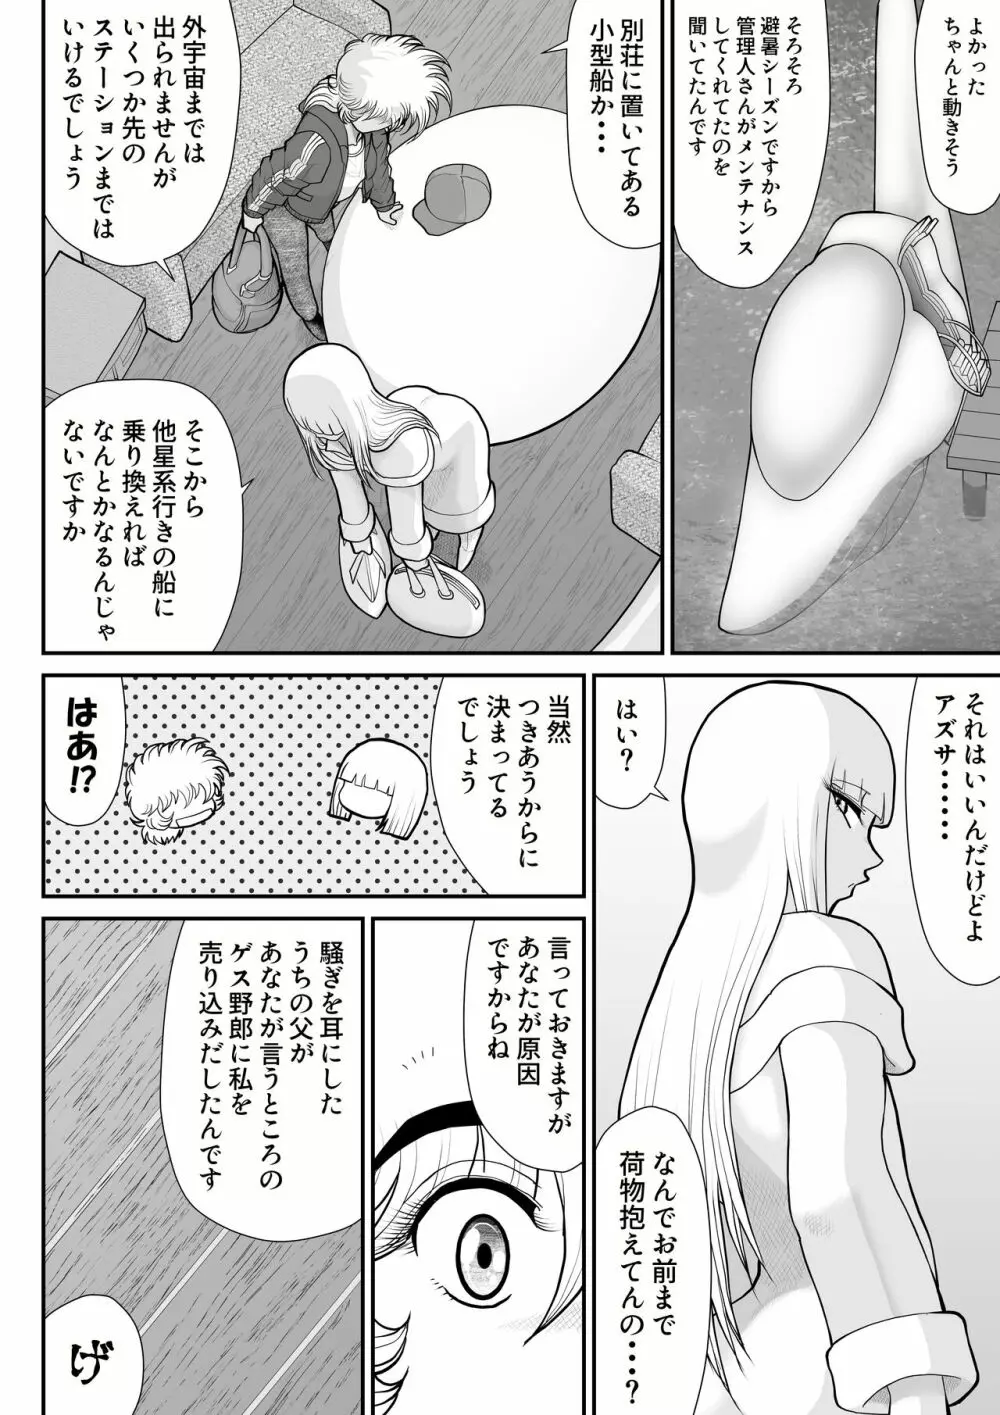 A&Iー宇宙の女賞金稼ぎ4- 14ページ